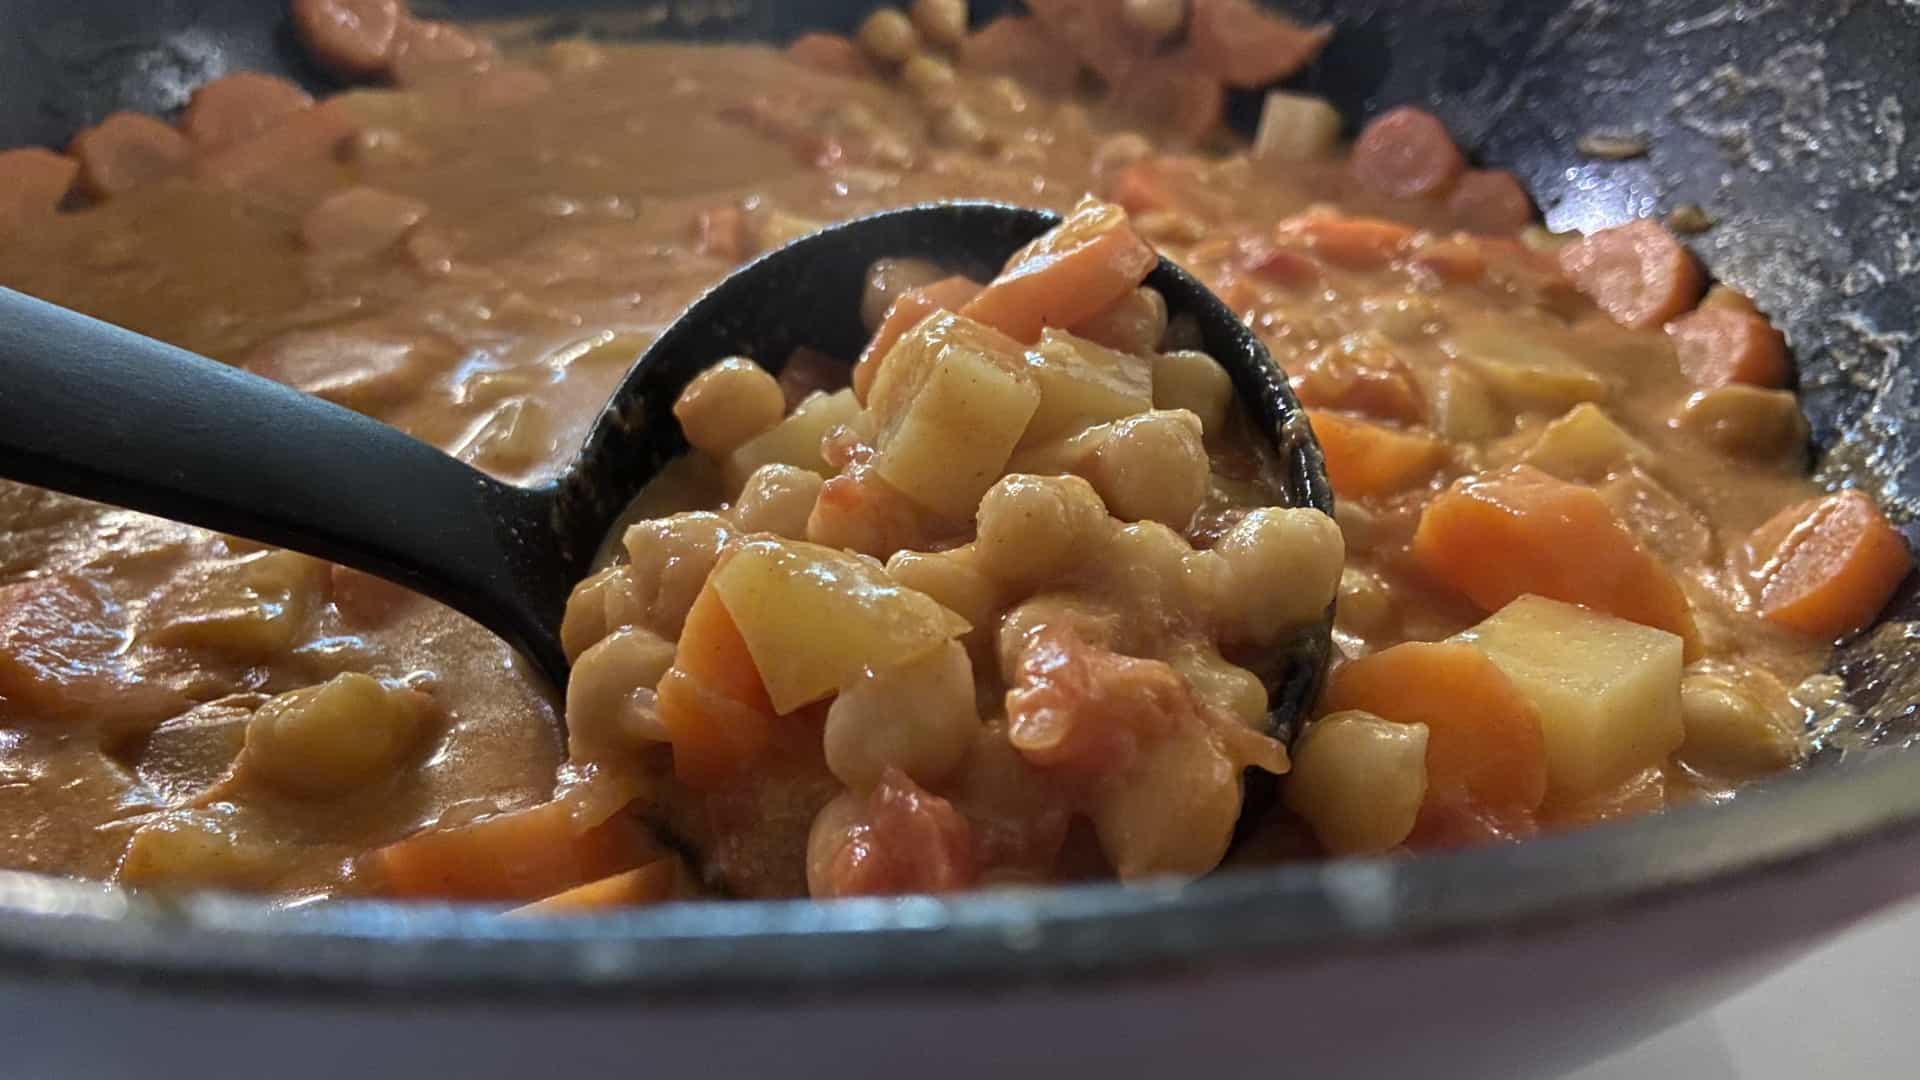 Rezept Kichererbsen-Kartoffel-Kokos-Curry mit Karotten - veganer Eintopf